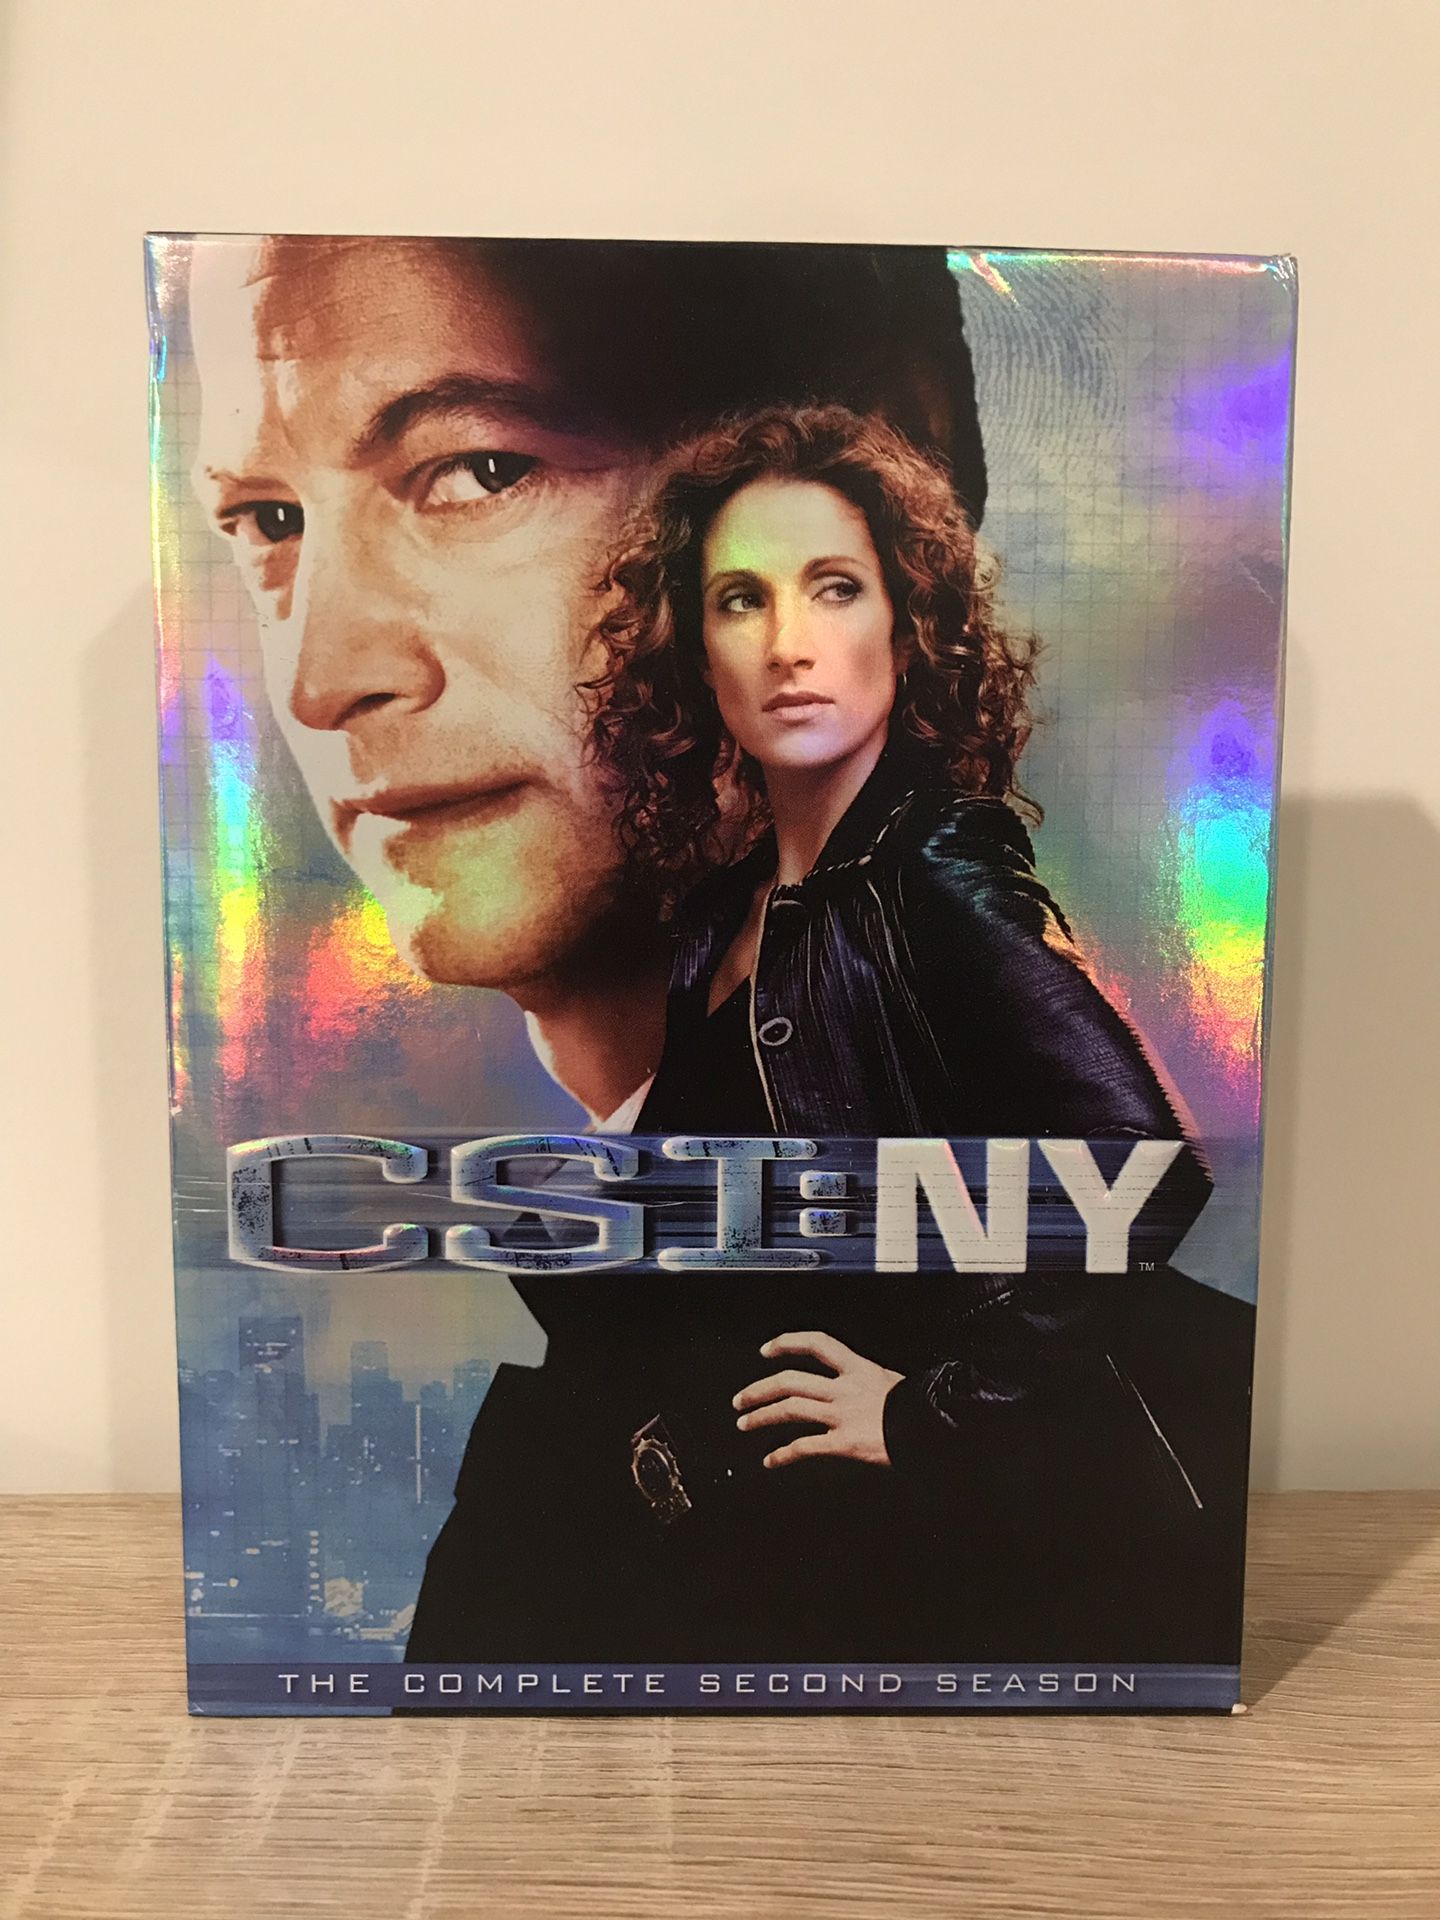 CSI New York Season 2 complete dvd box set